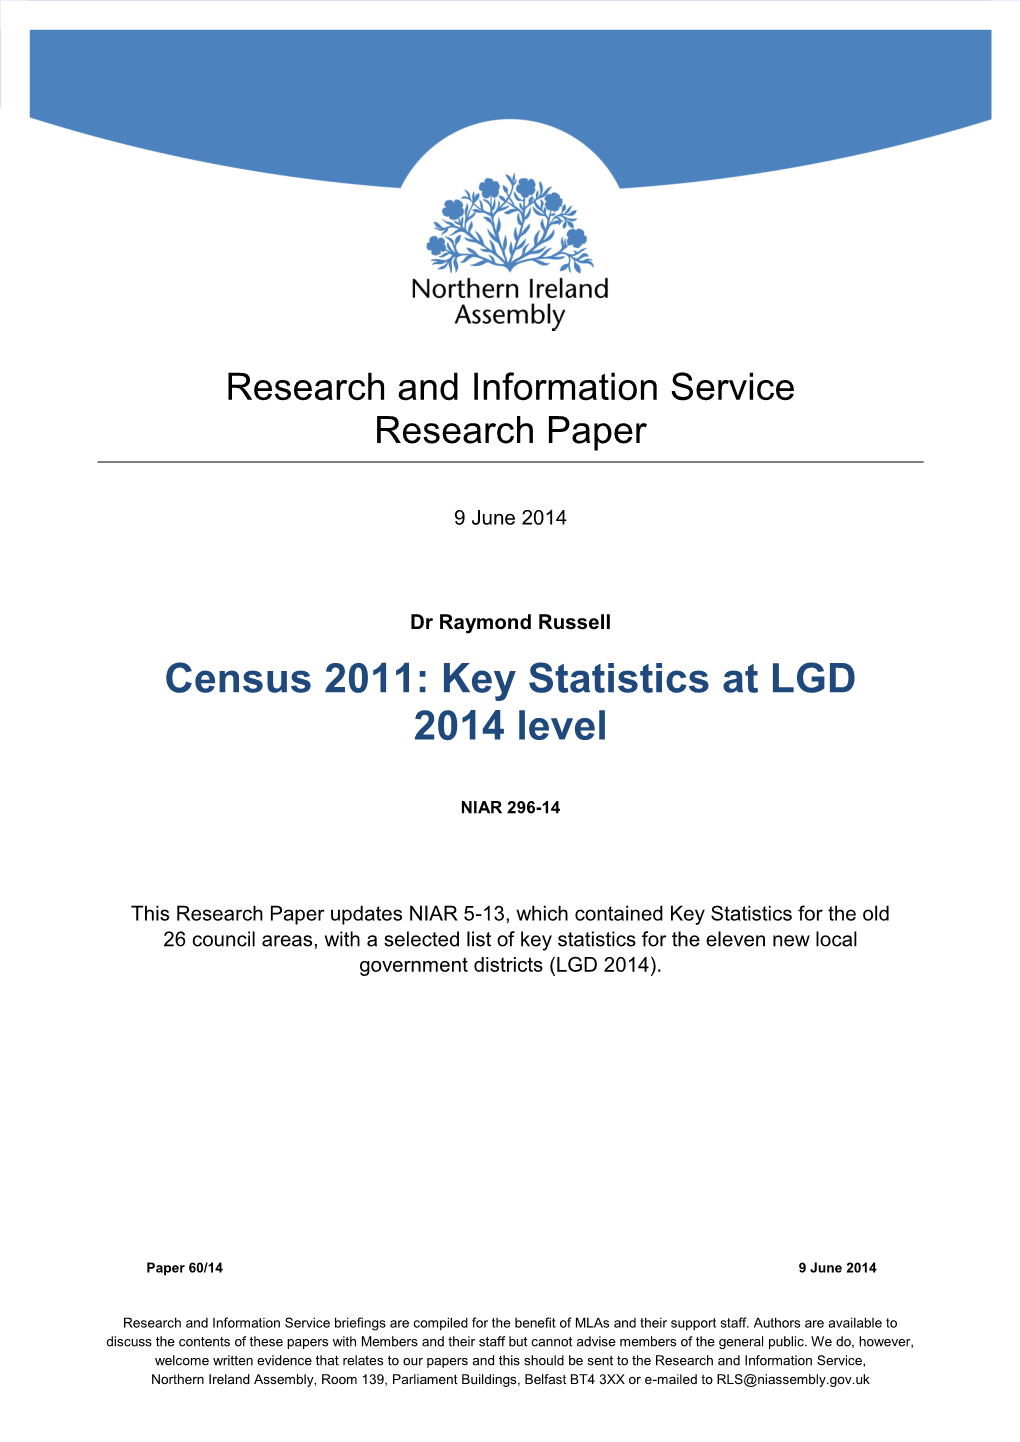 Census 2011: Key Statistics at LGD 2014 Level